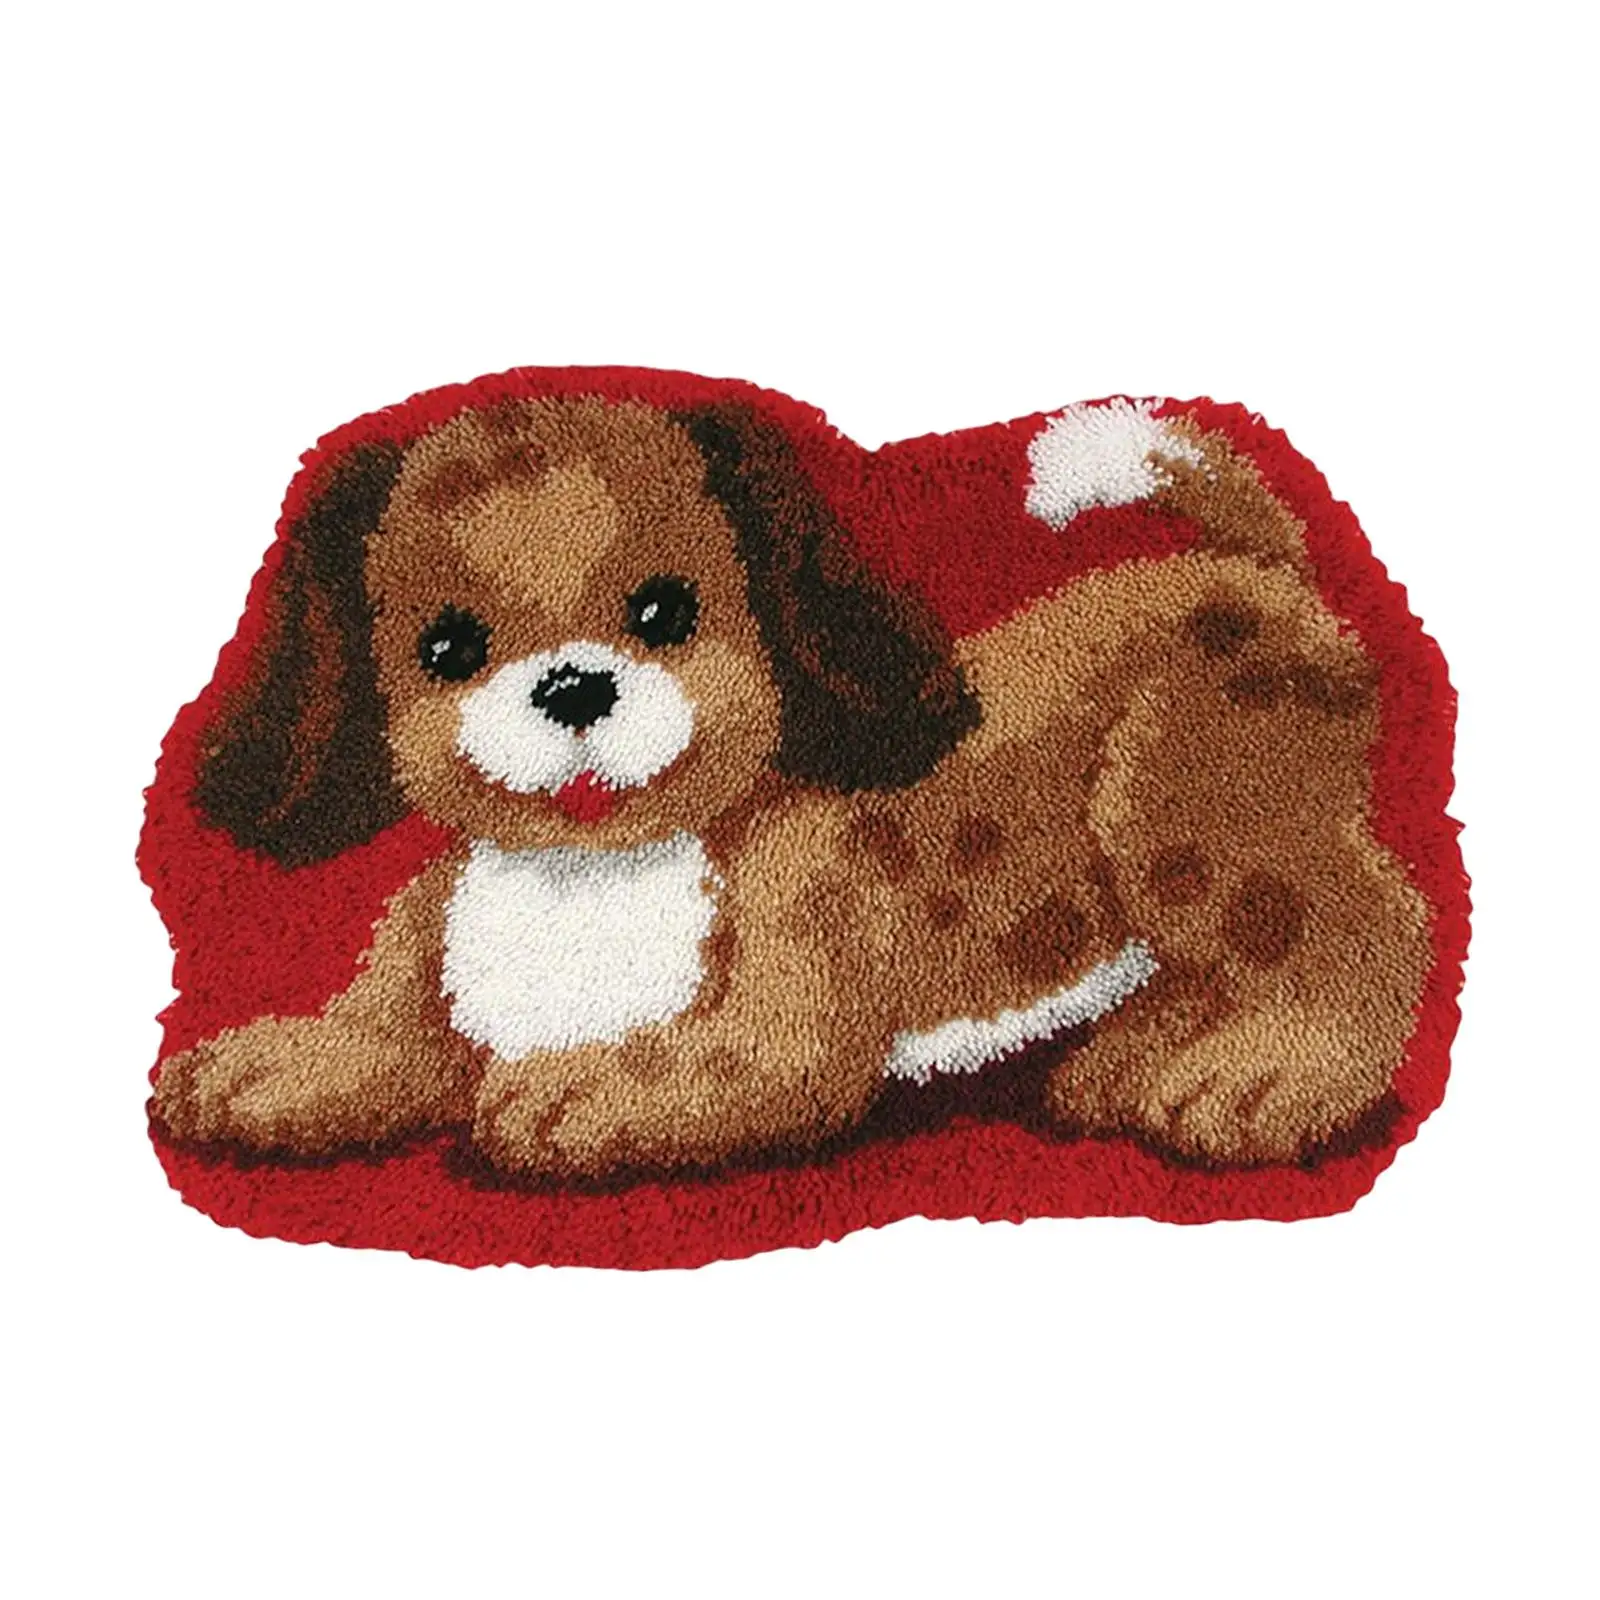 Creative Carpet Making Kit Cute Puppy Festival Gift Handmade for Christmas